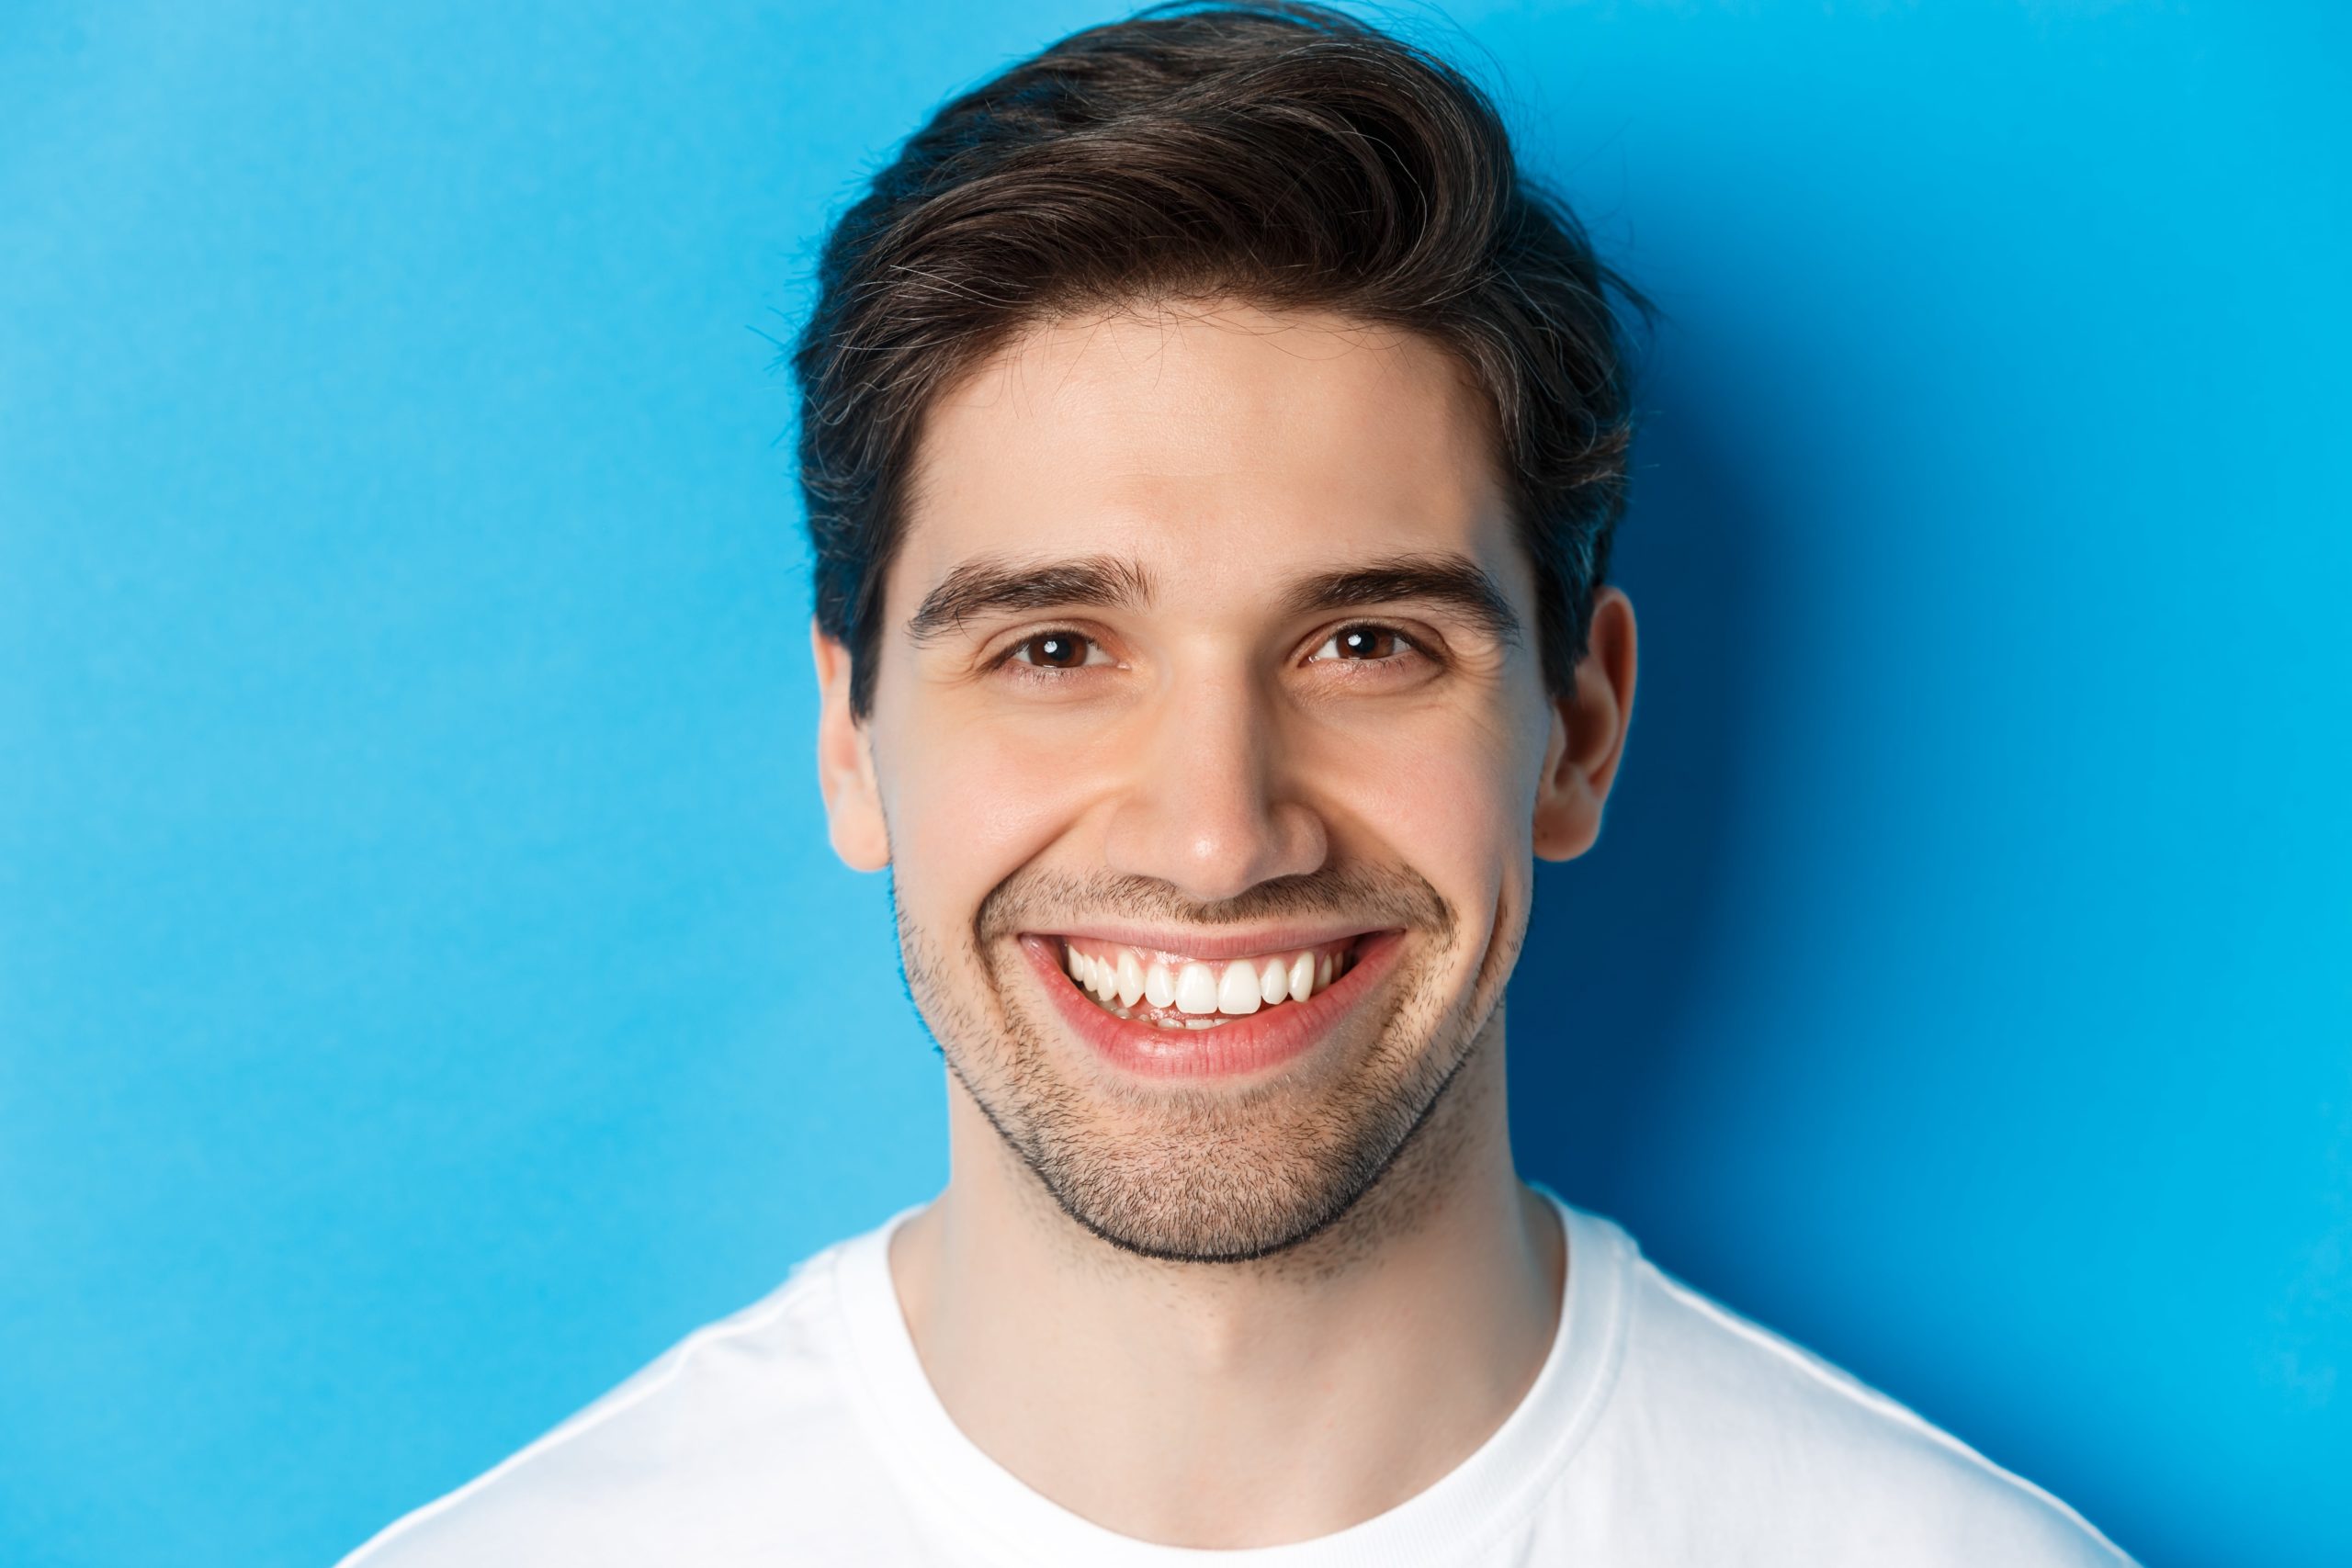 Teeth Whitening - Kensington Court Clinic -bright white smile - what to expect